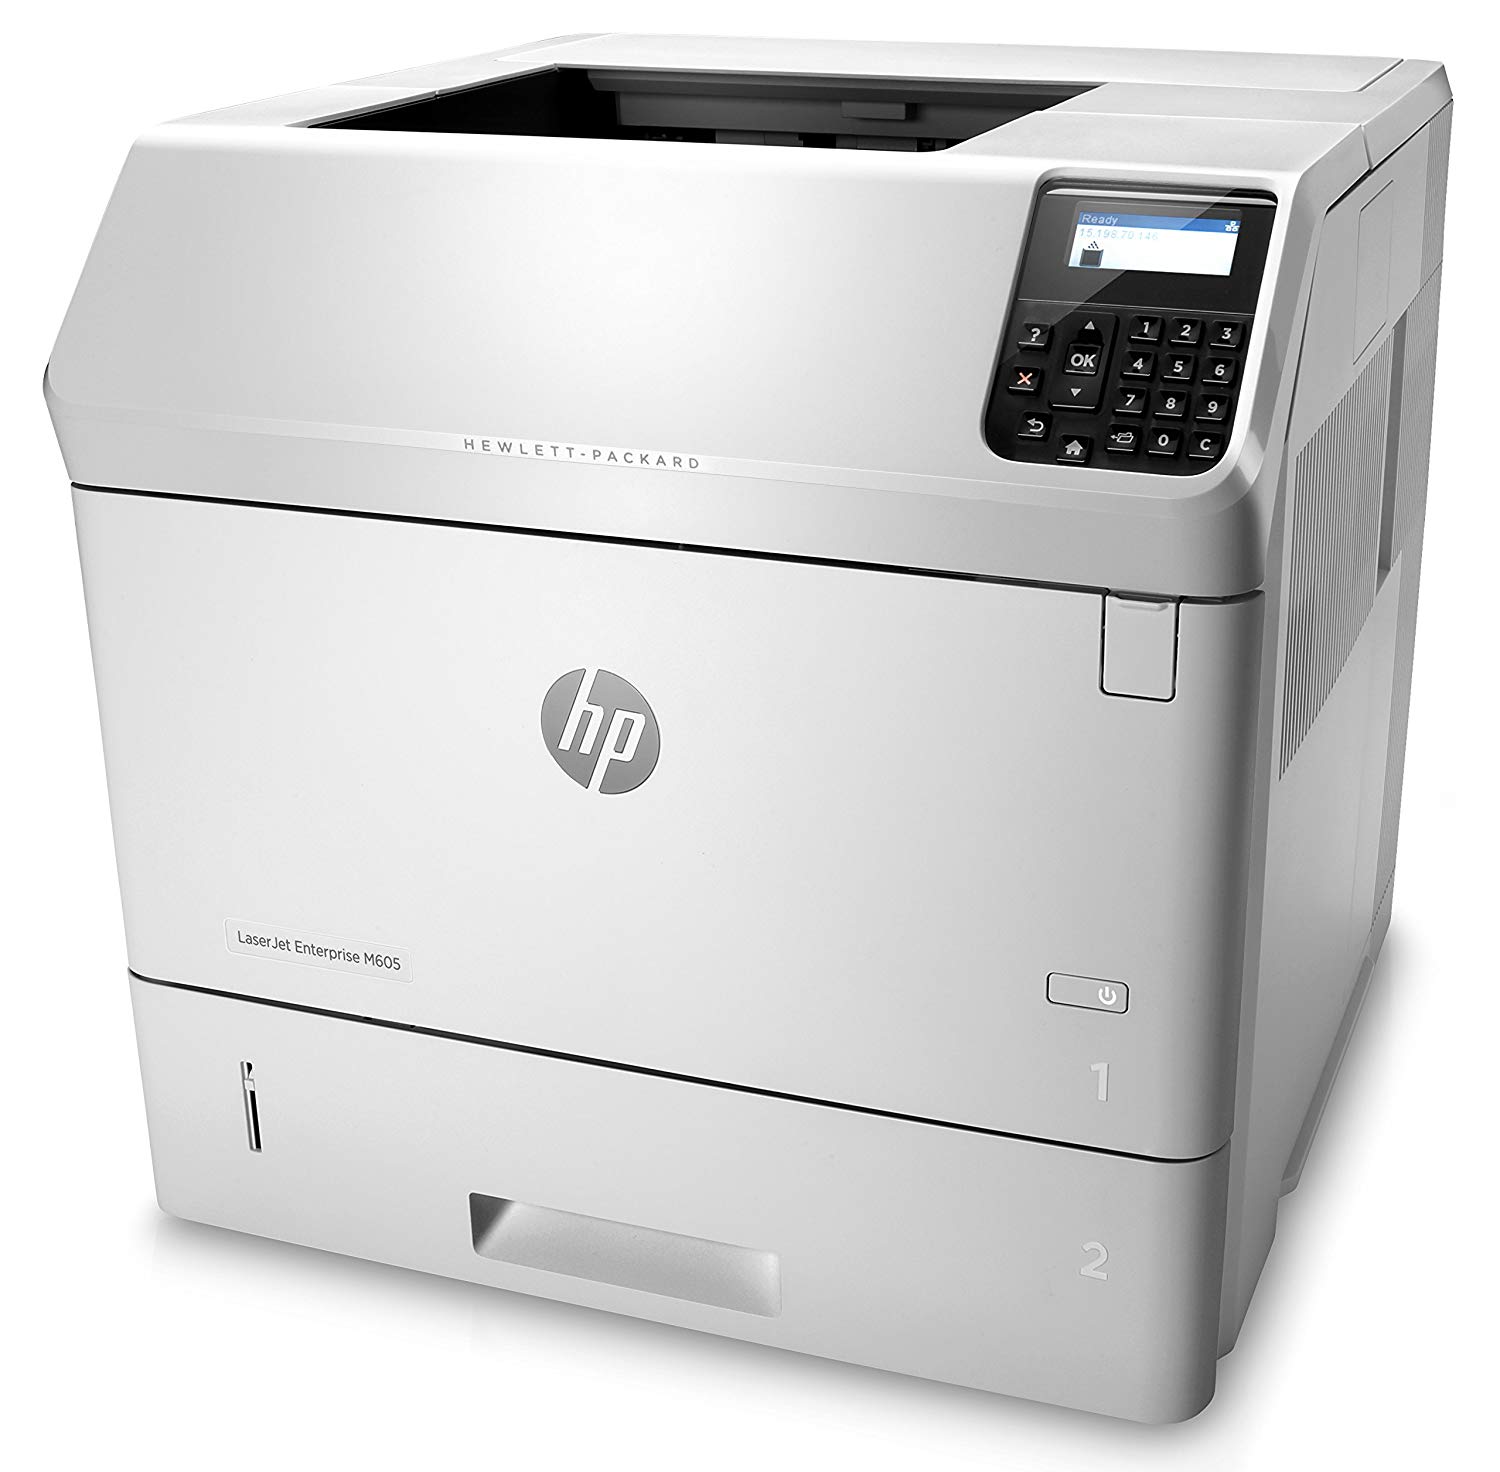 HP LaserJet Enterprise m605n Stampante Professionale per grandi gruppi di lavoro